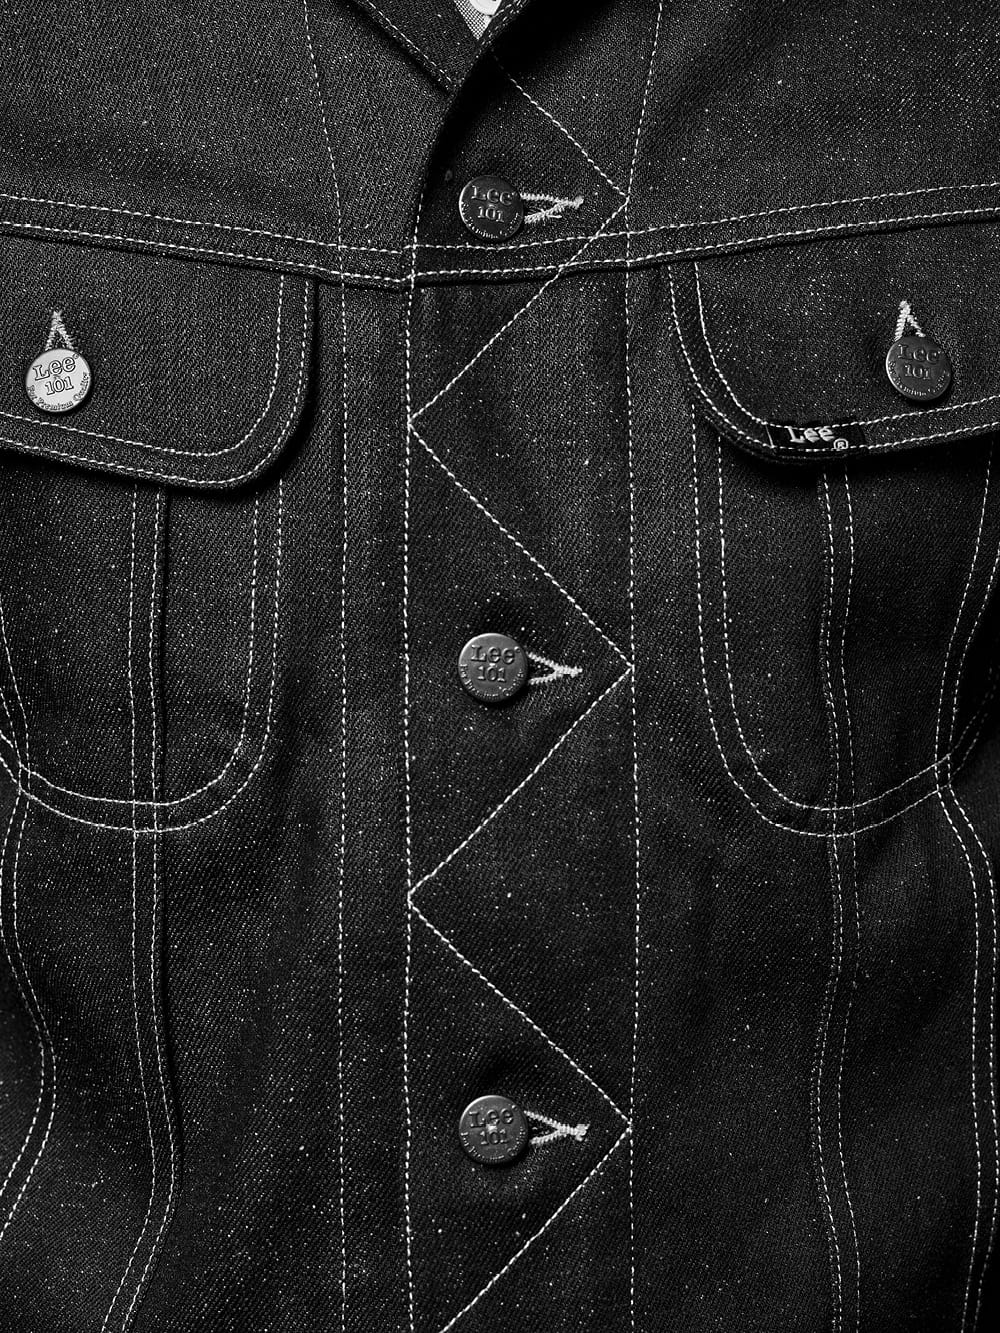 Lee101-journal-jacket-retouching